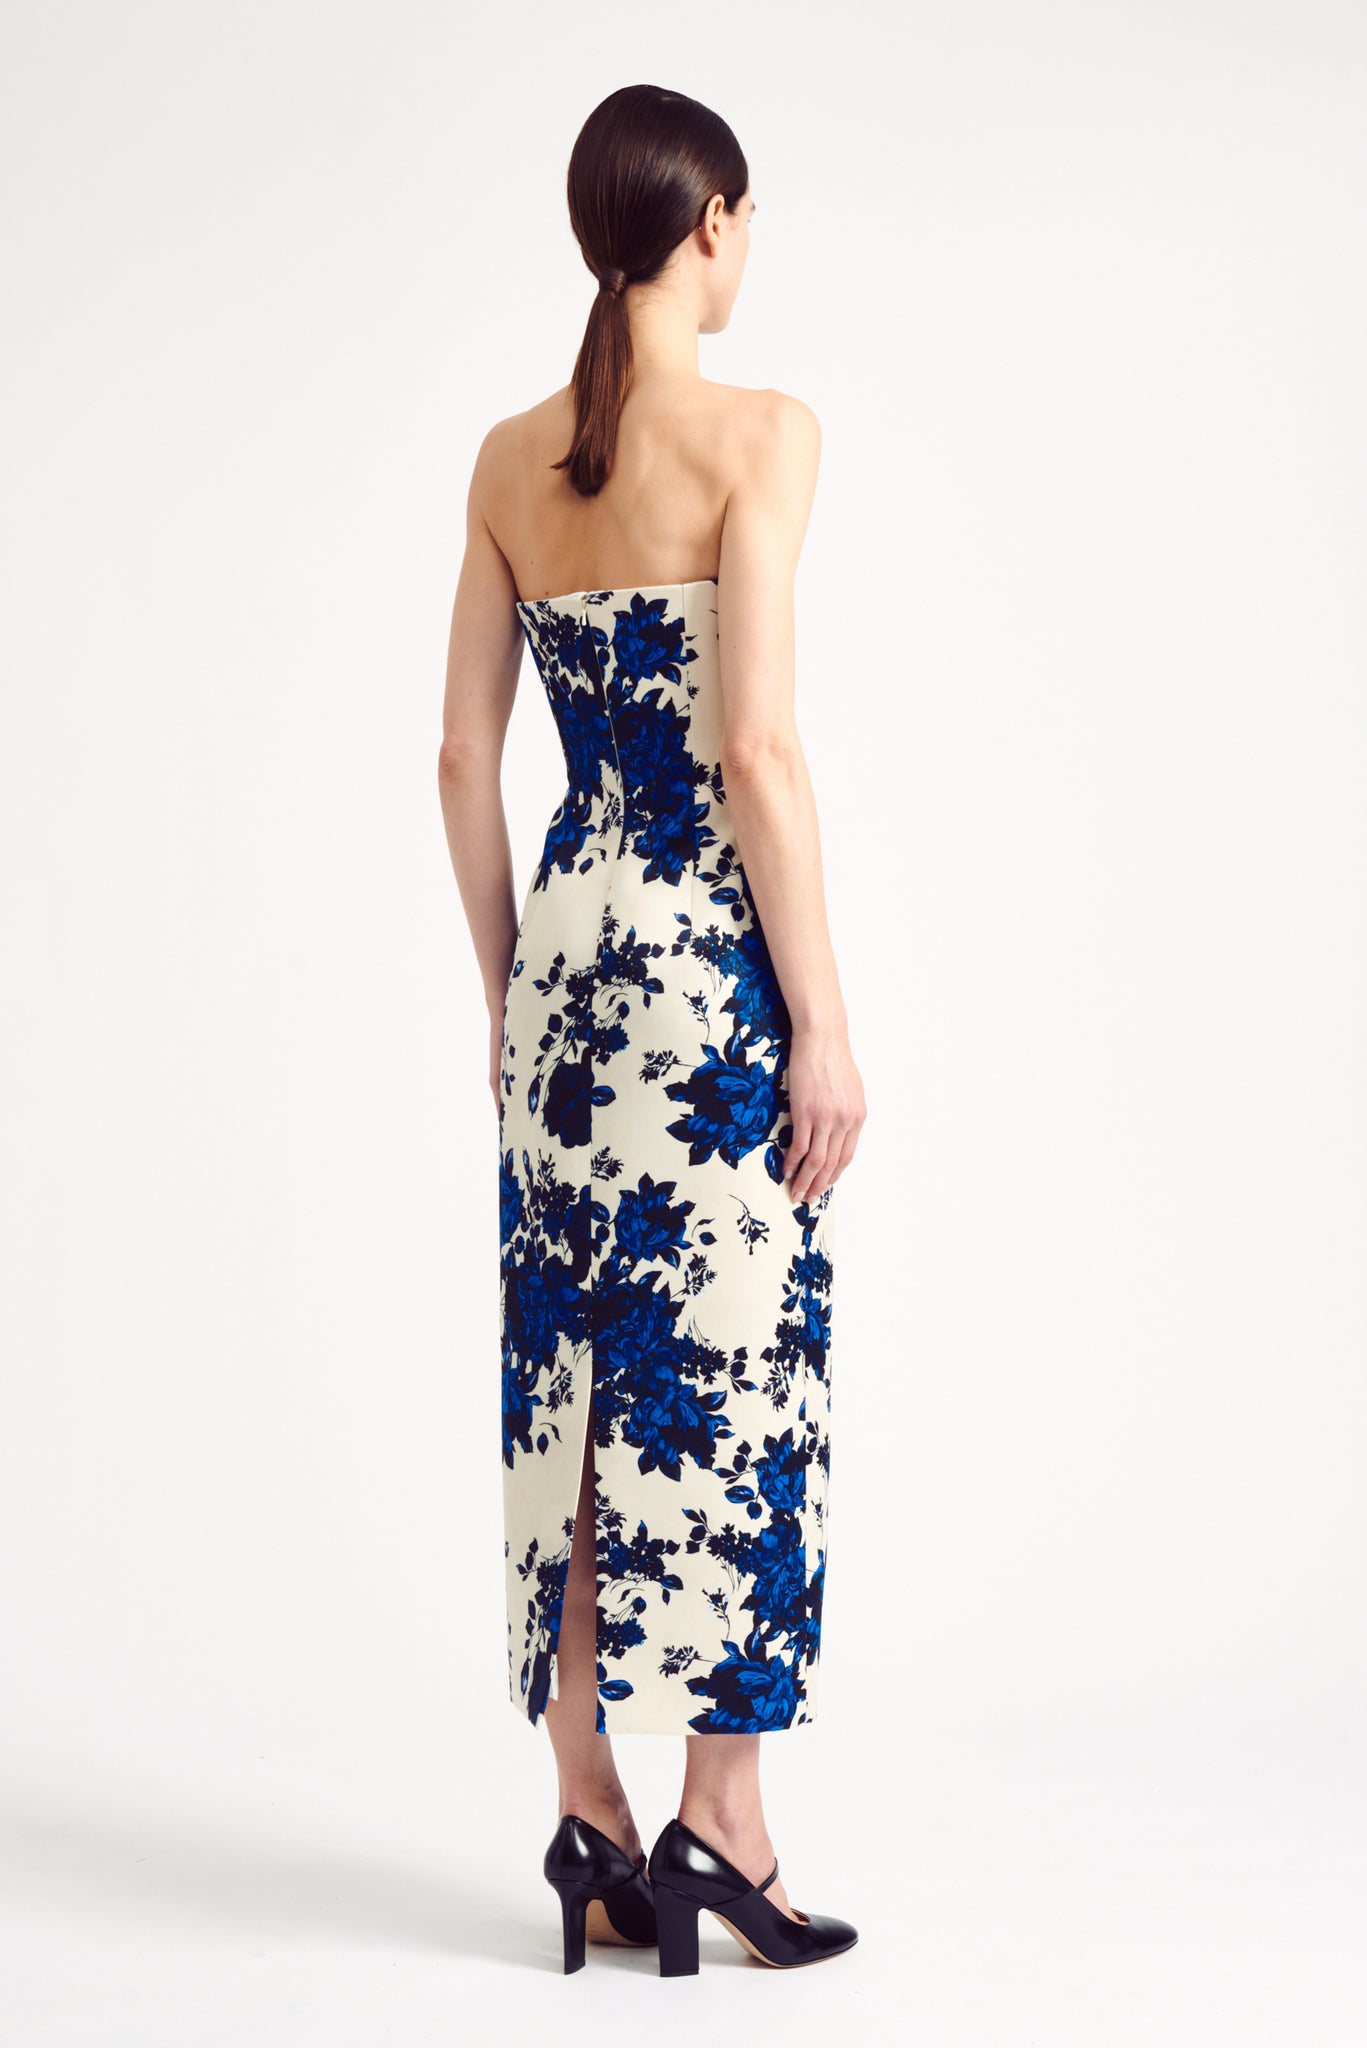 Yulie Strapless Dress in Blue Floral Printed Taffeta Faille | Emilia Wickstead